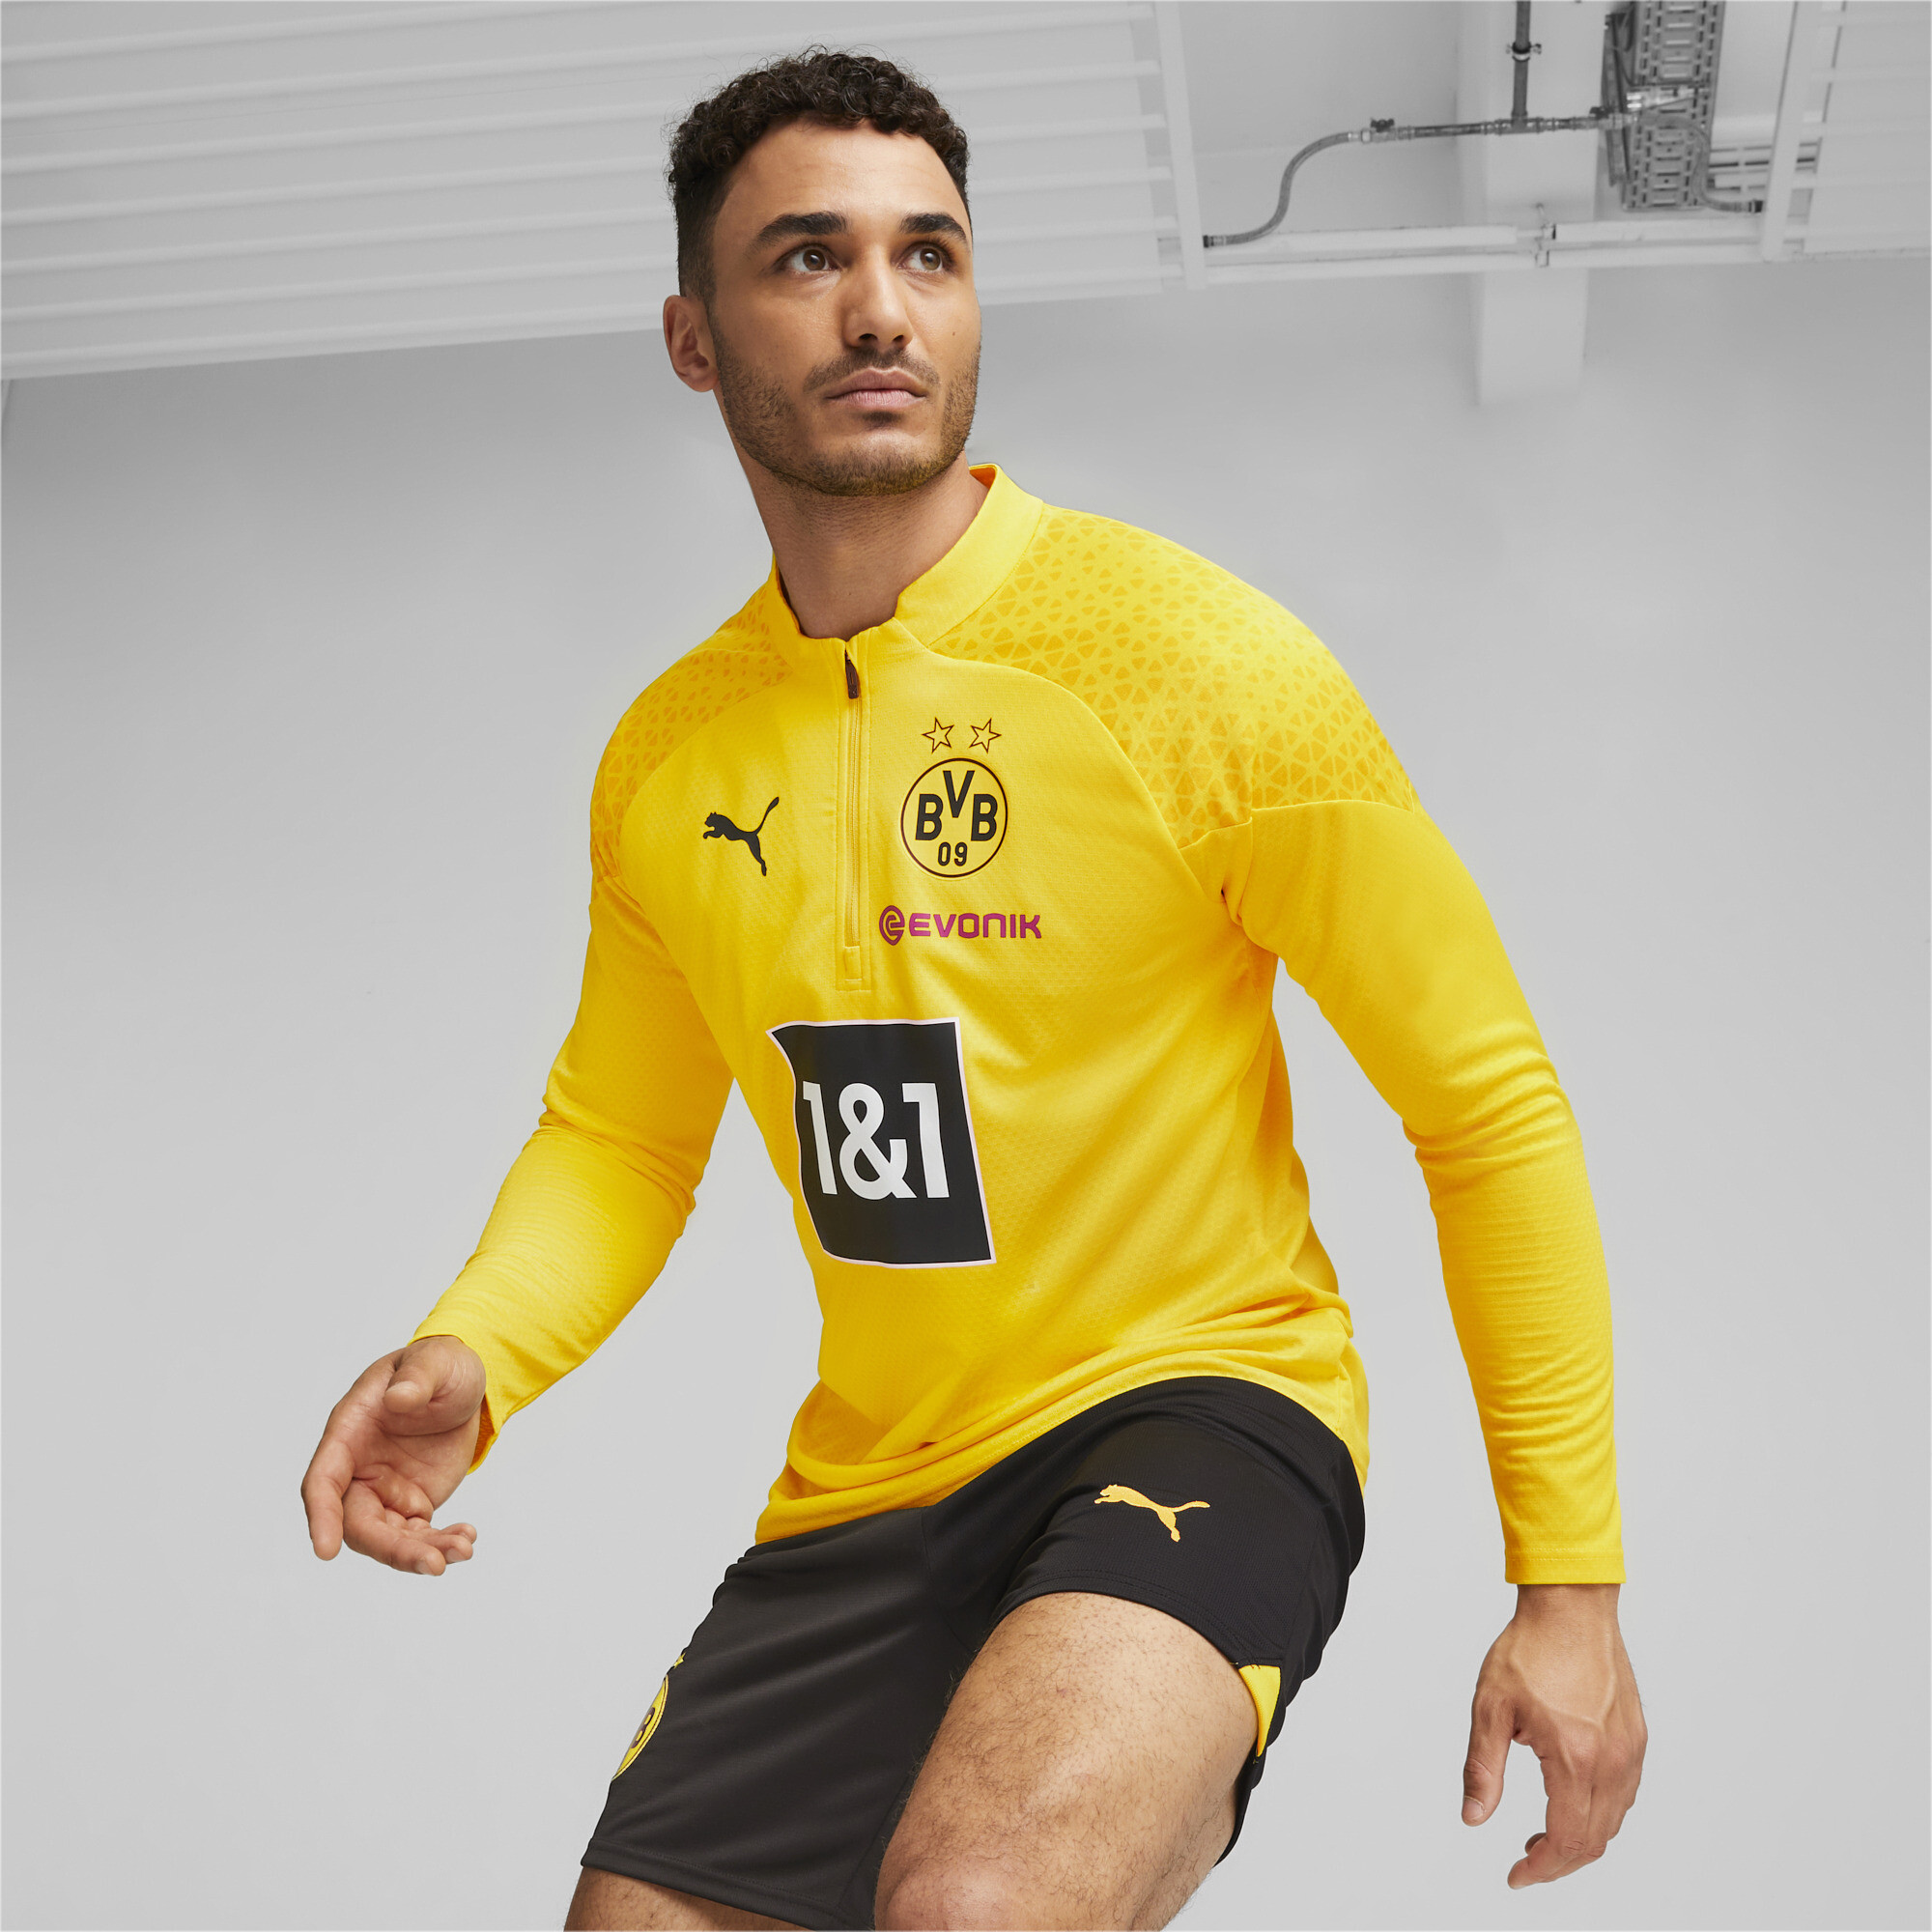 Men's Puma Borussia Dortmund Football Training Quarter-zip Top, Yellow Top, Size S Top, Clothing